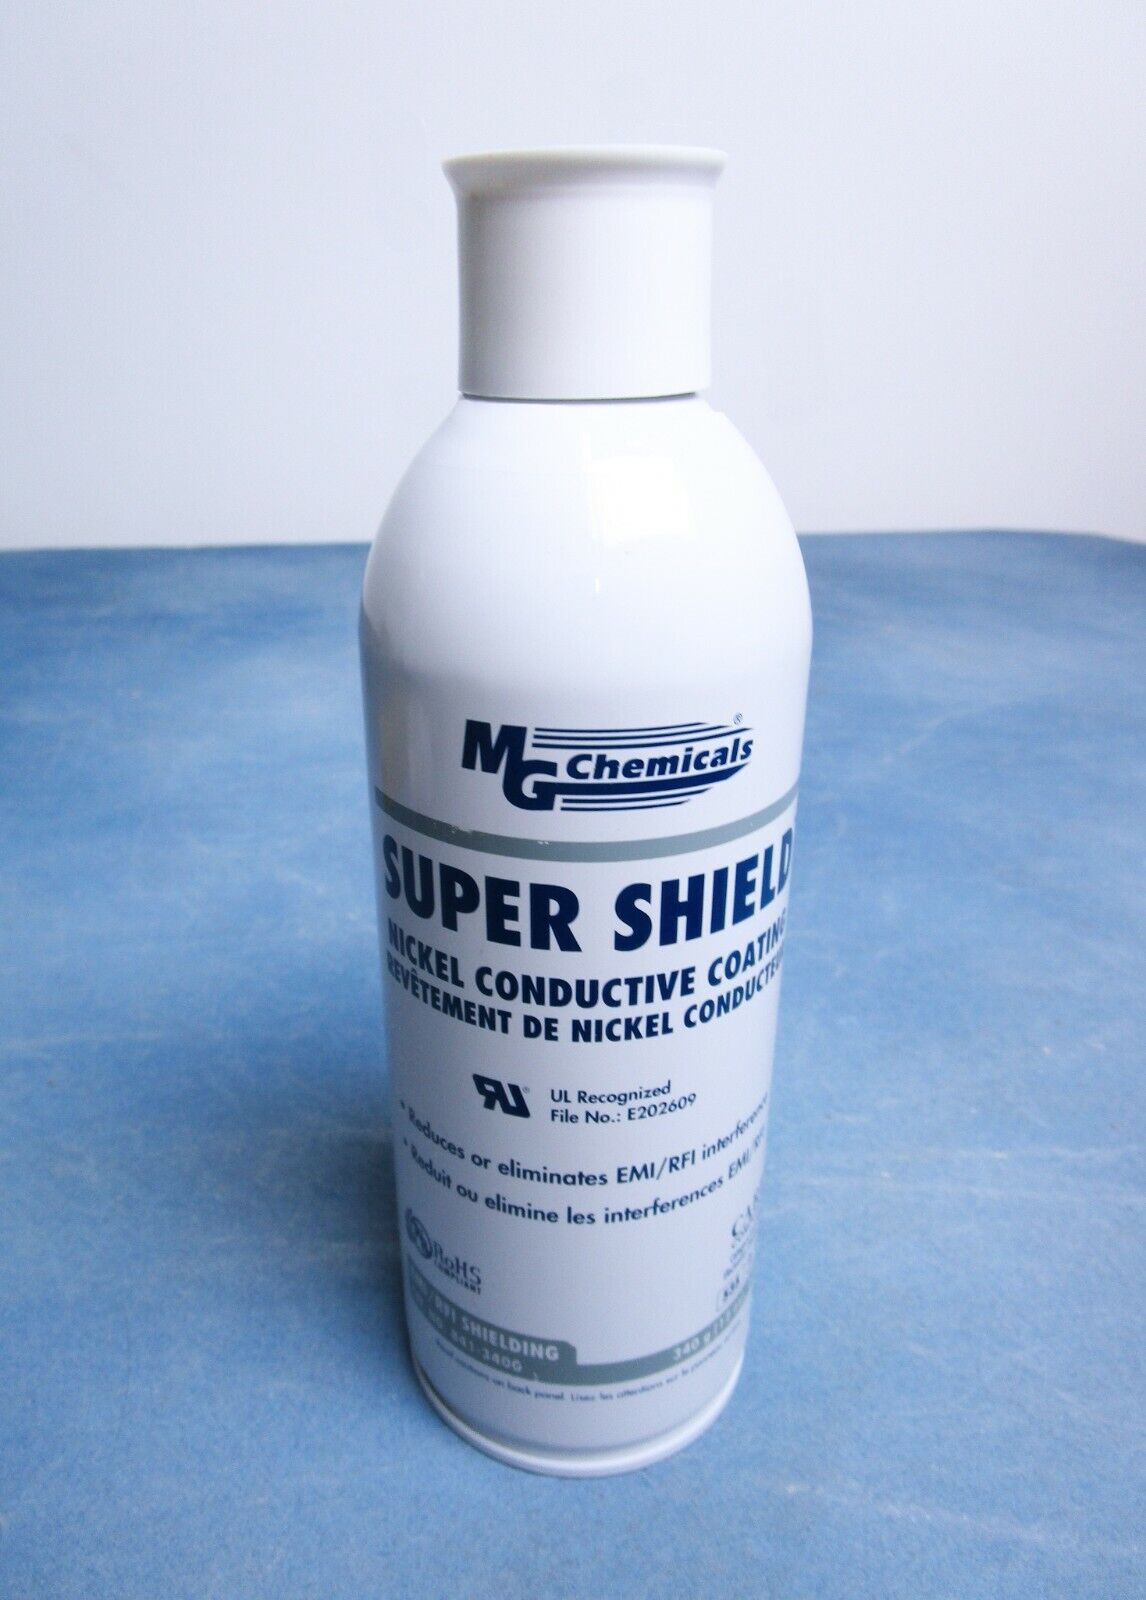 MG Chemicals Super Shield Nickel Conductive Spray Coating 12OZ